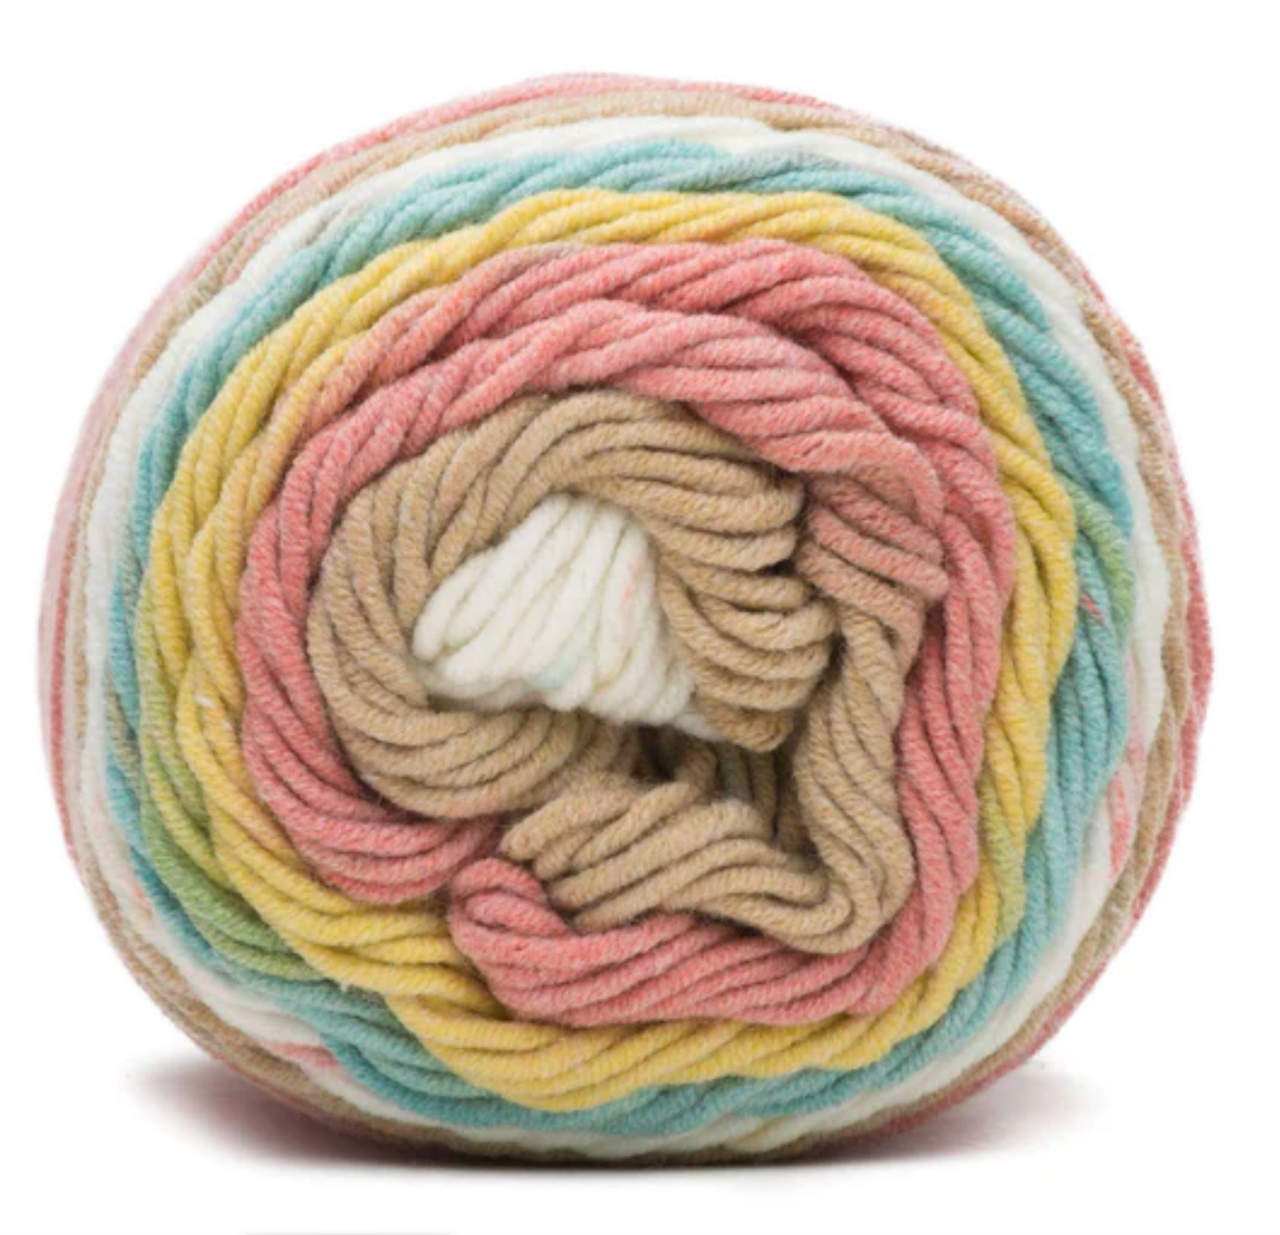 Caron Cotton Cakes Boho Floral 100g Cotton / Acrylic Knitting & Crochet Yarn